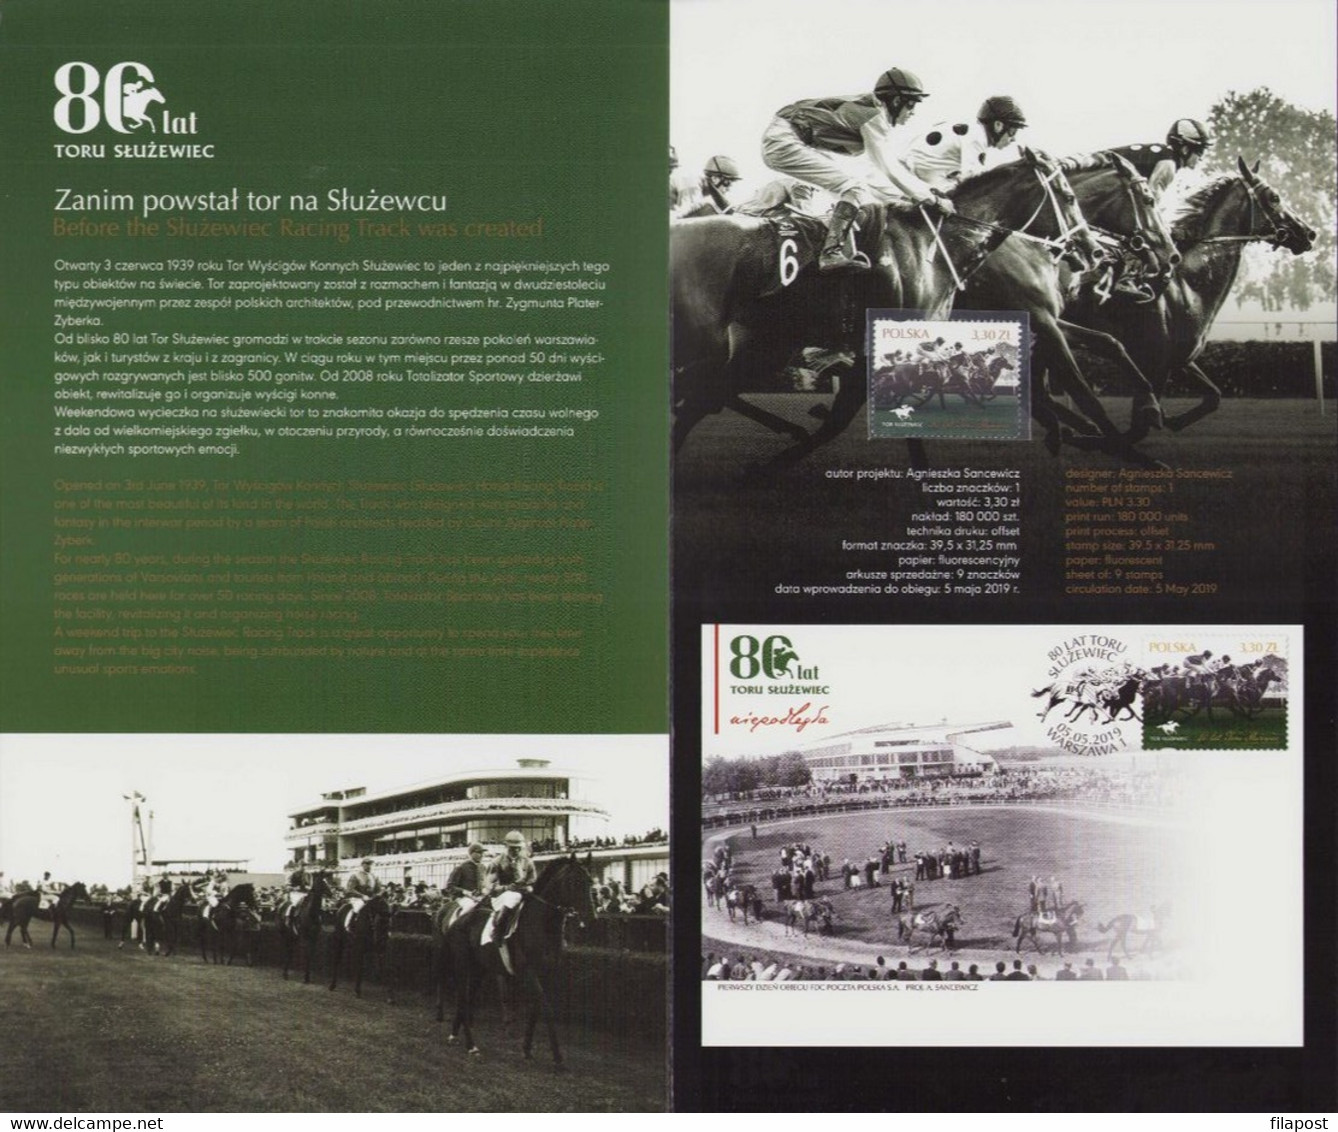 POLAND 2019 Booklet / Sluzewiec Horse Racing Track, Sport, Architecture, Animals, Horseriders / With Stamp MNH** - Markenheftchen